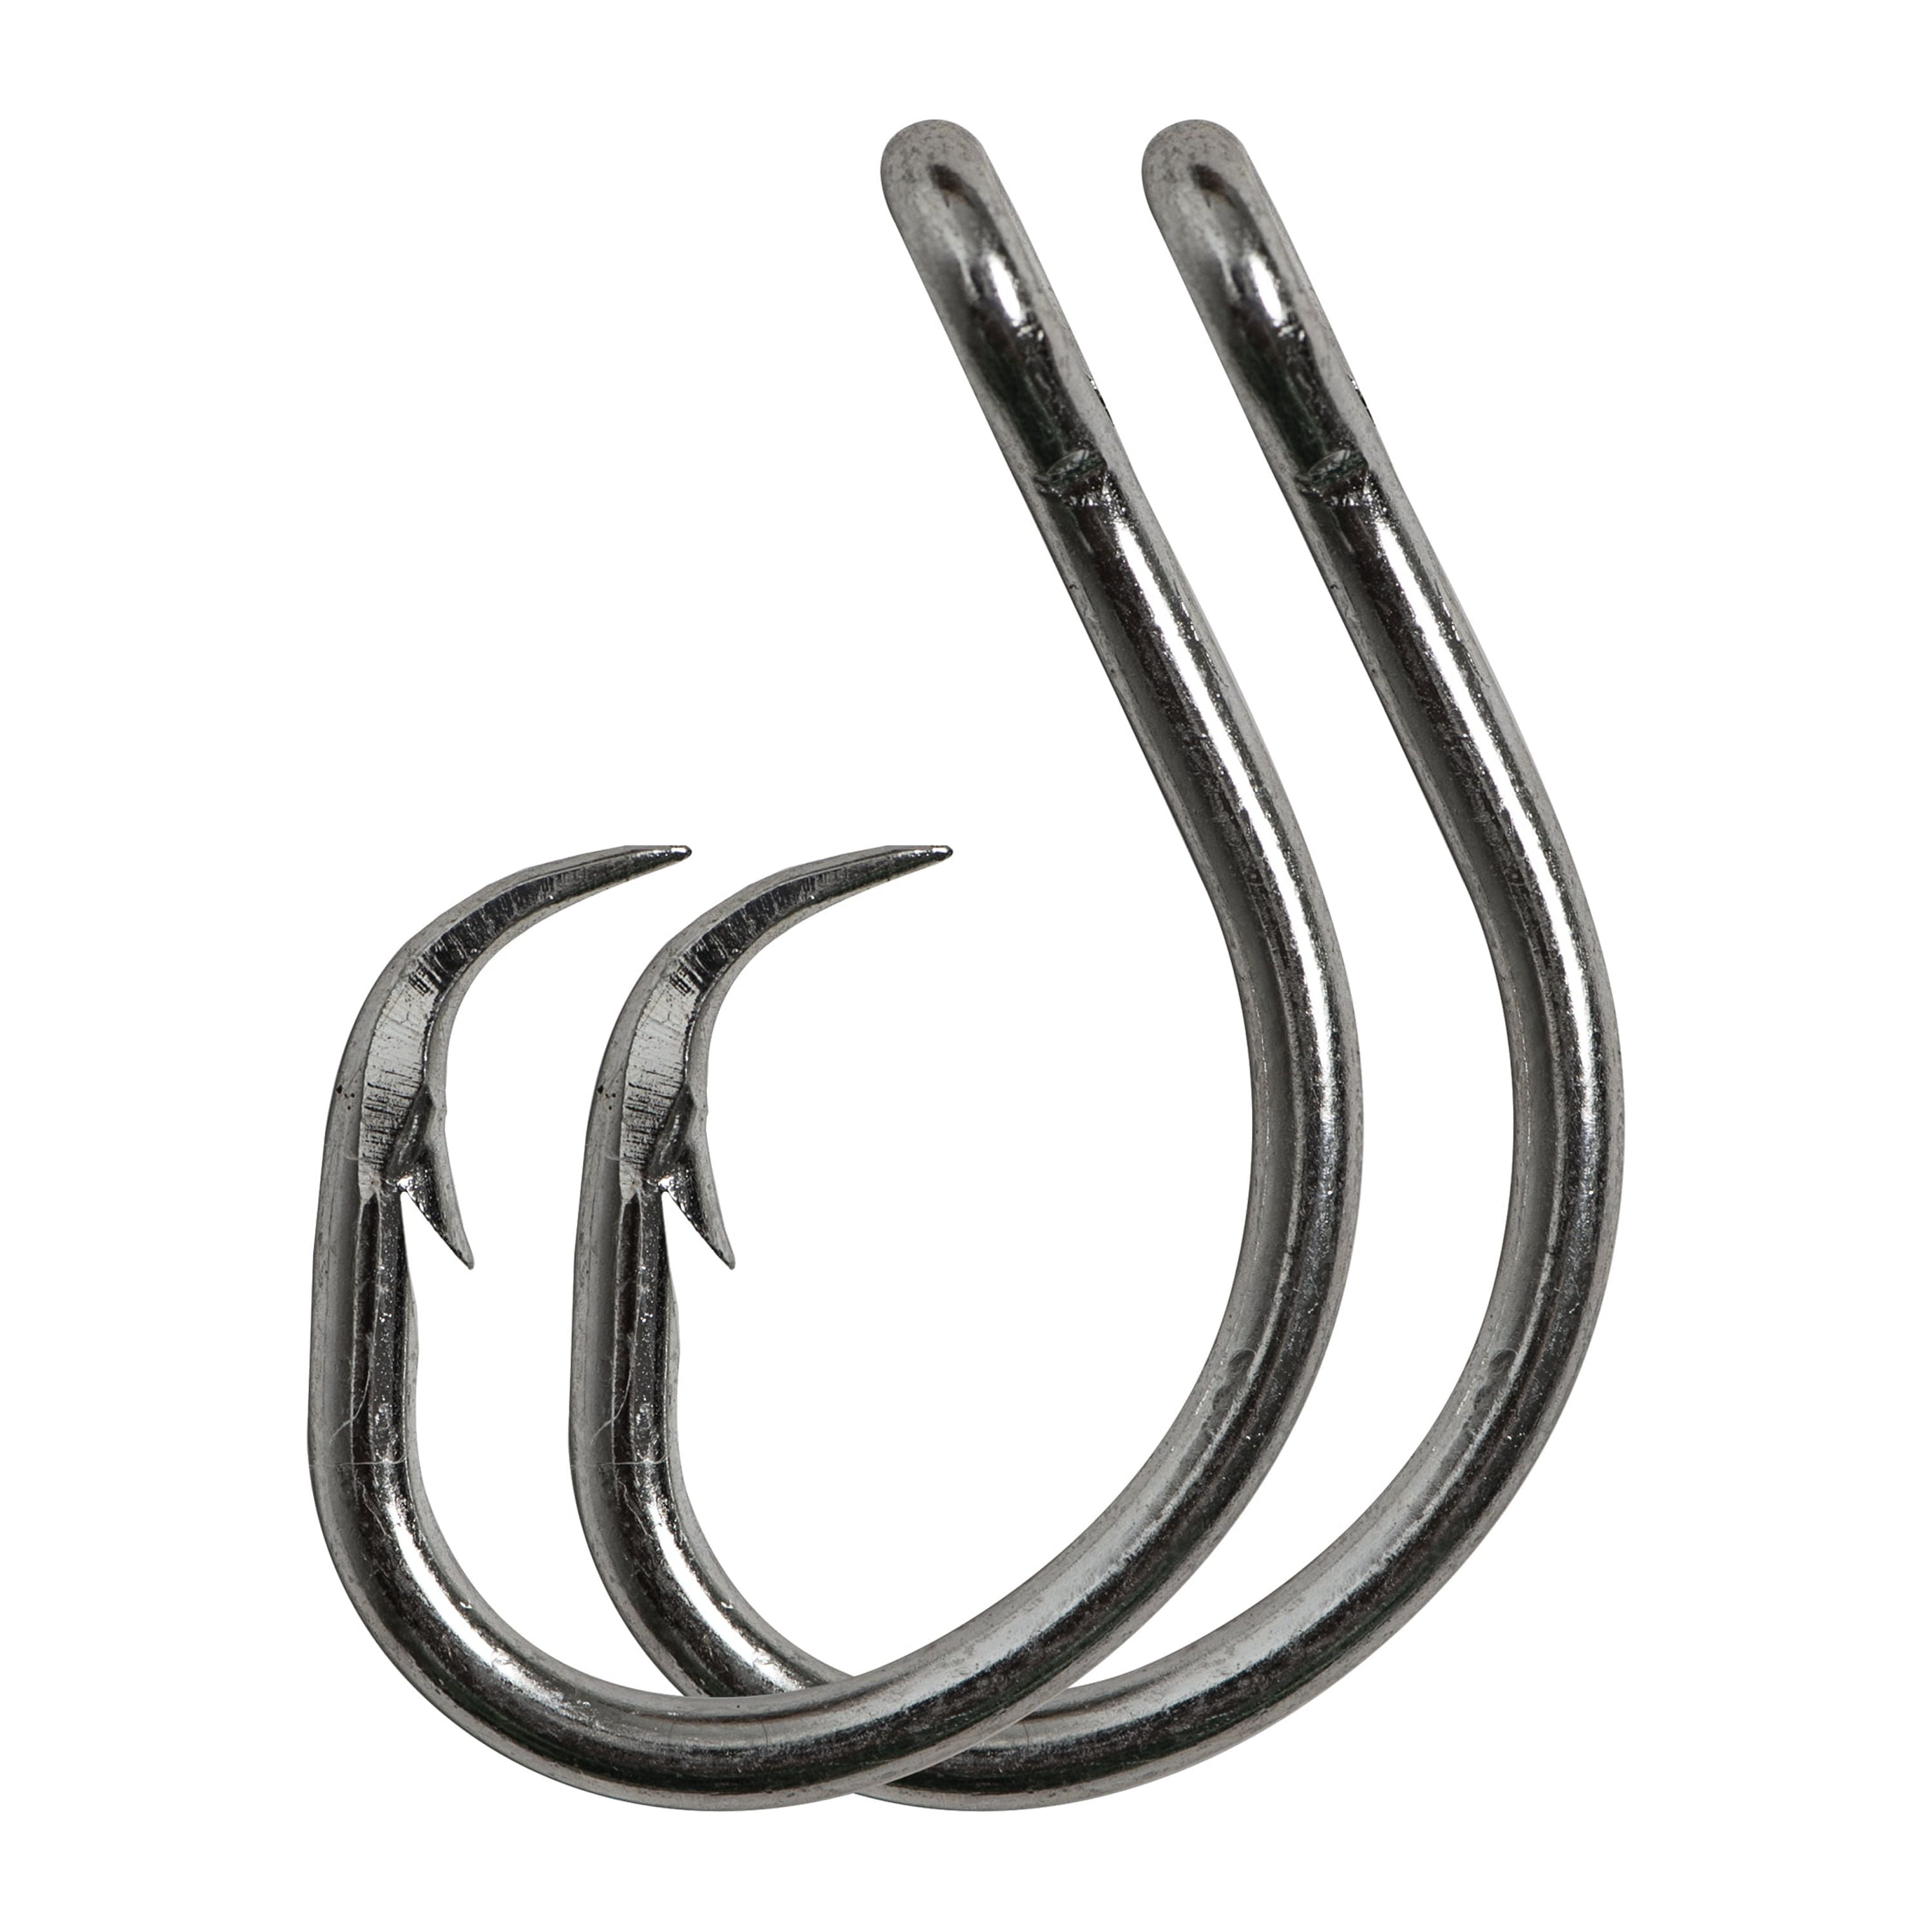 Minleer fishing hooks Assortment 10 sizes Circle hooks fishing